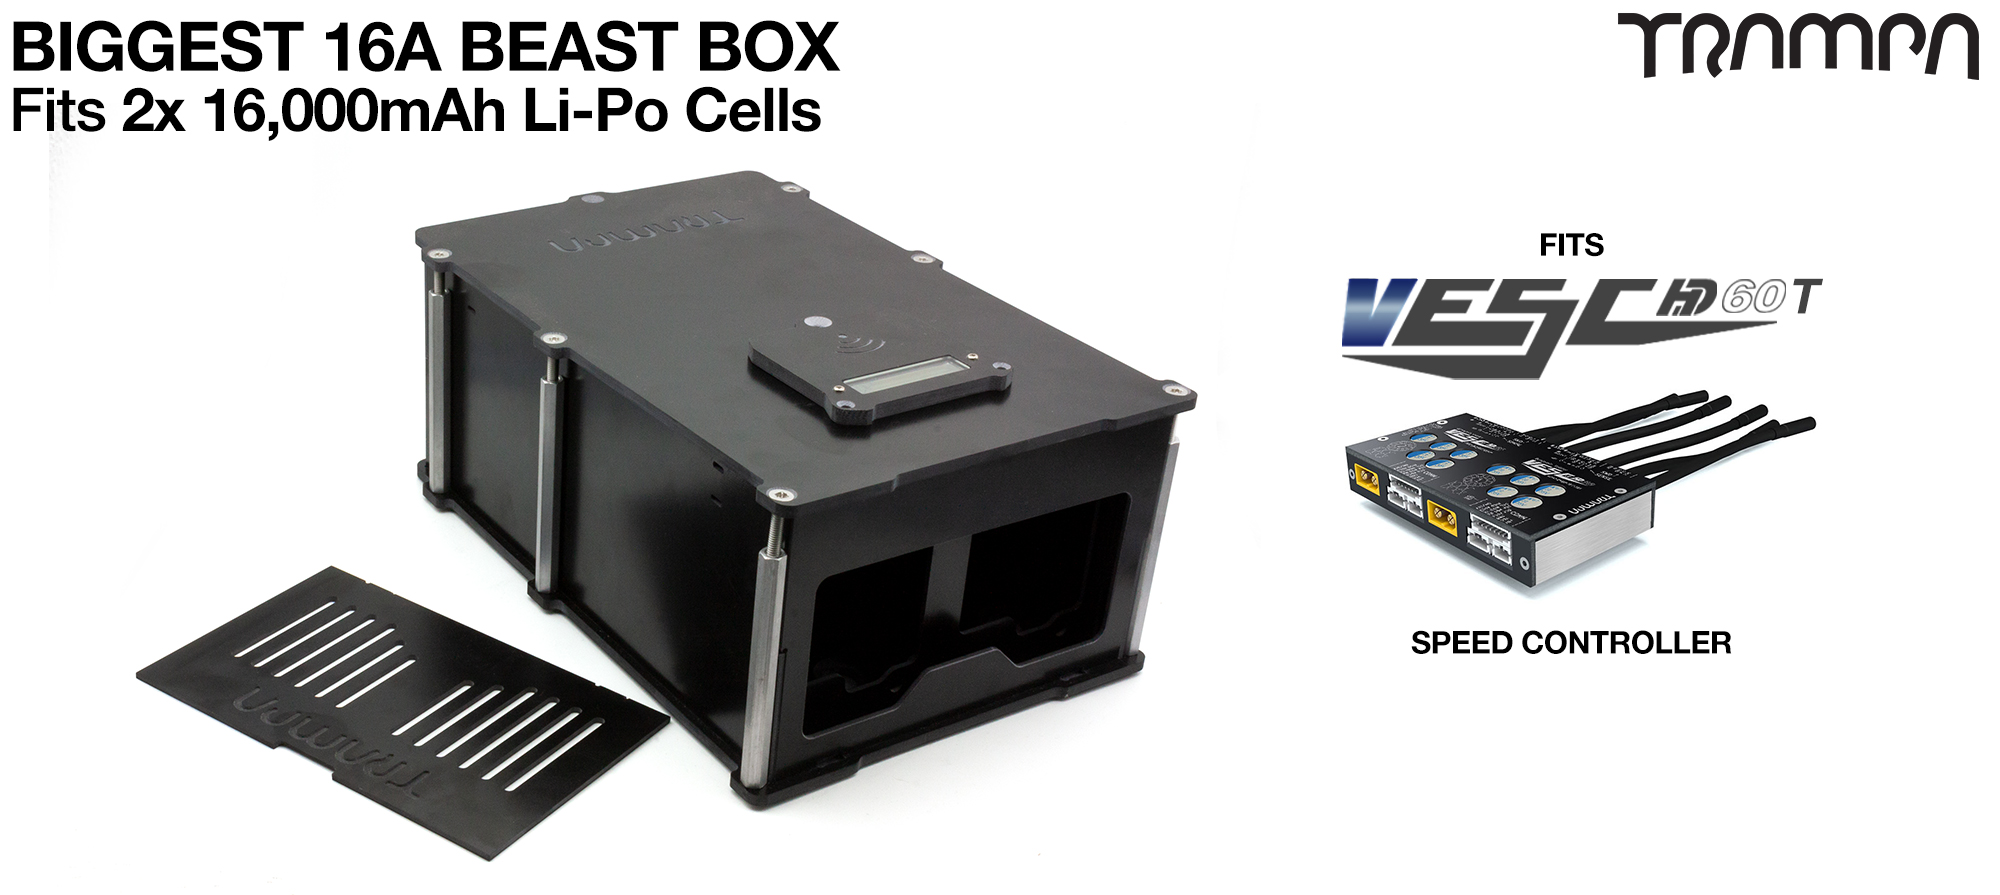 16A BIGGEST BEAST Box fits 1x VESC HD-60T & 2x 6s 16A cells for max power TWIN Motor